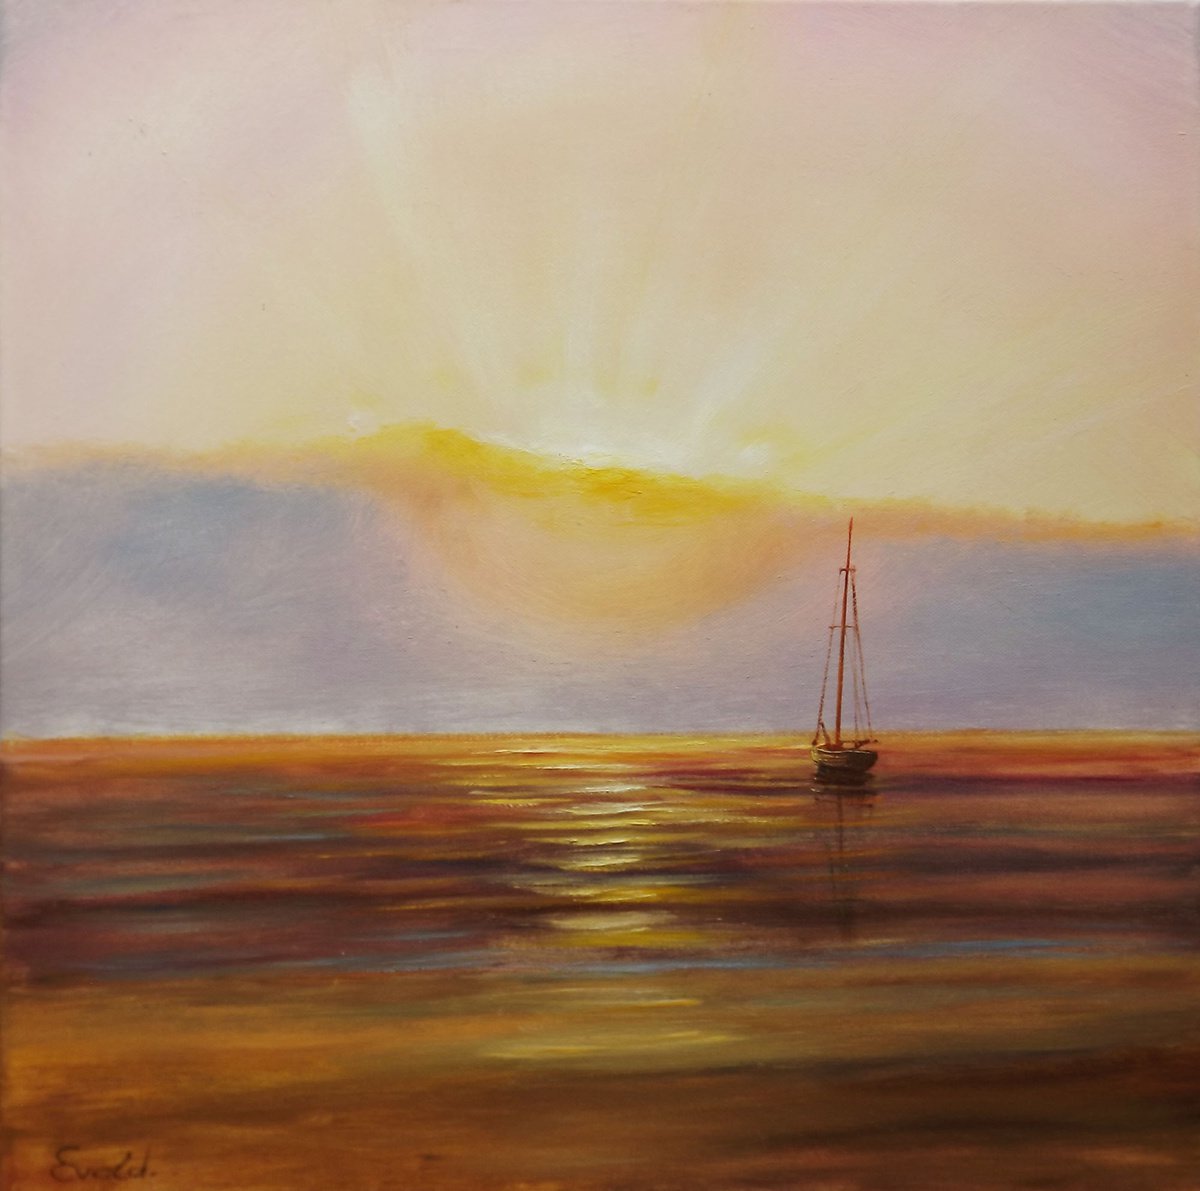 Calm Sea Sunset by Evald